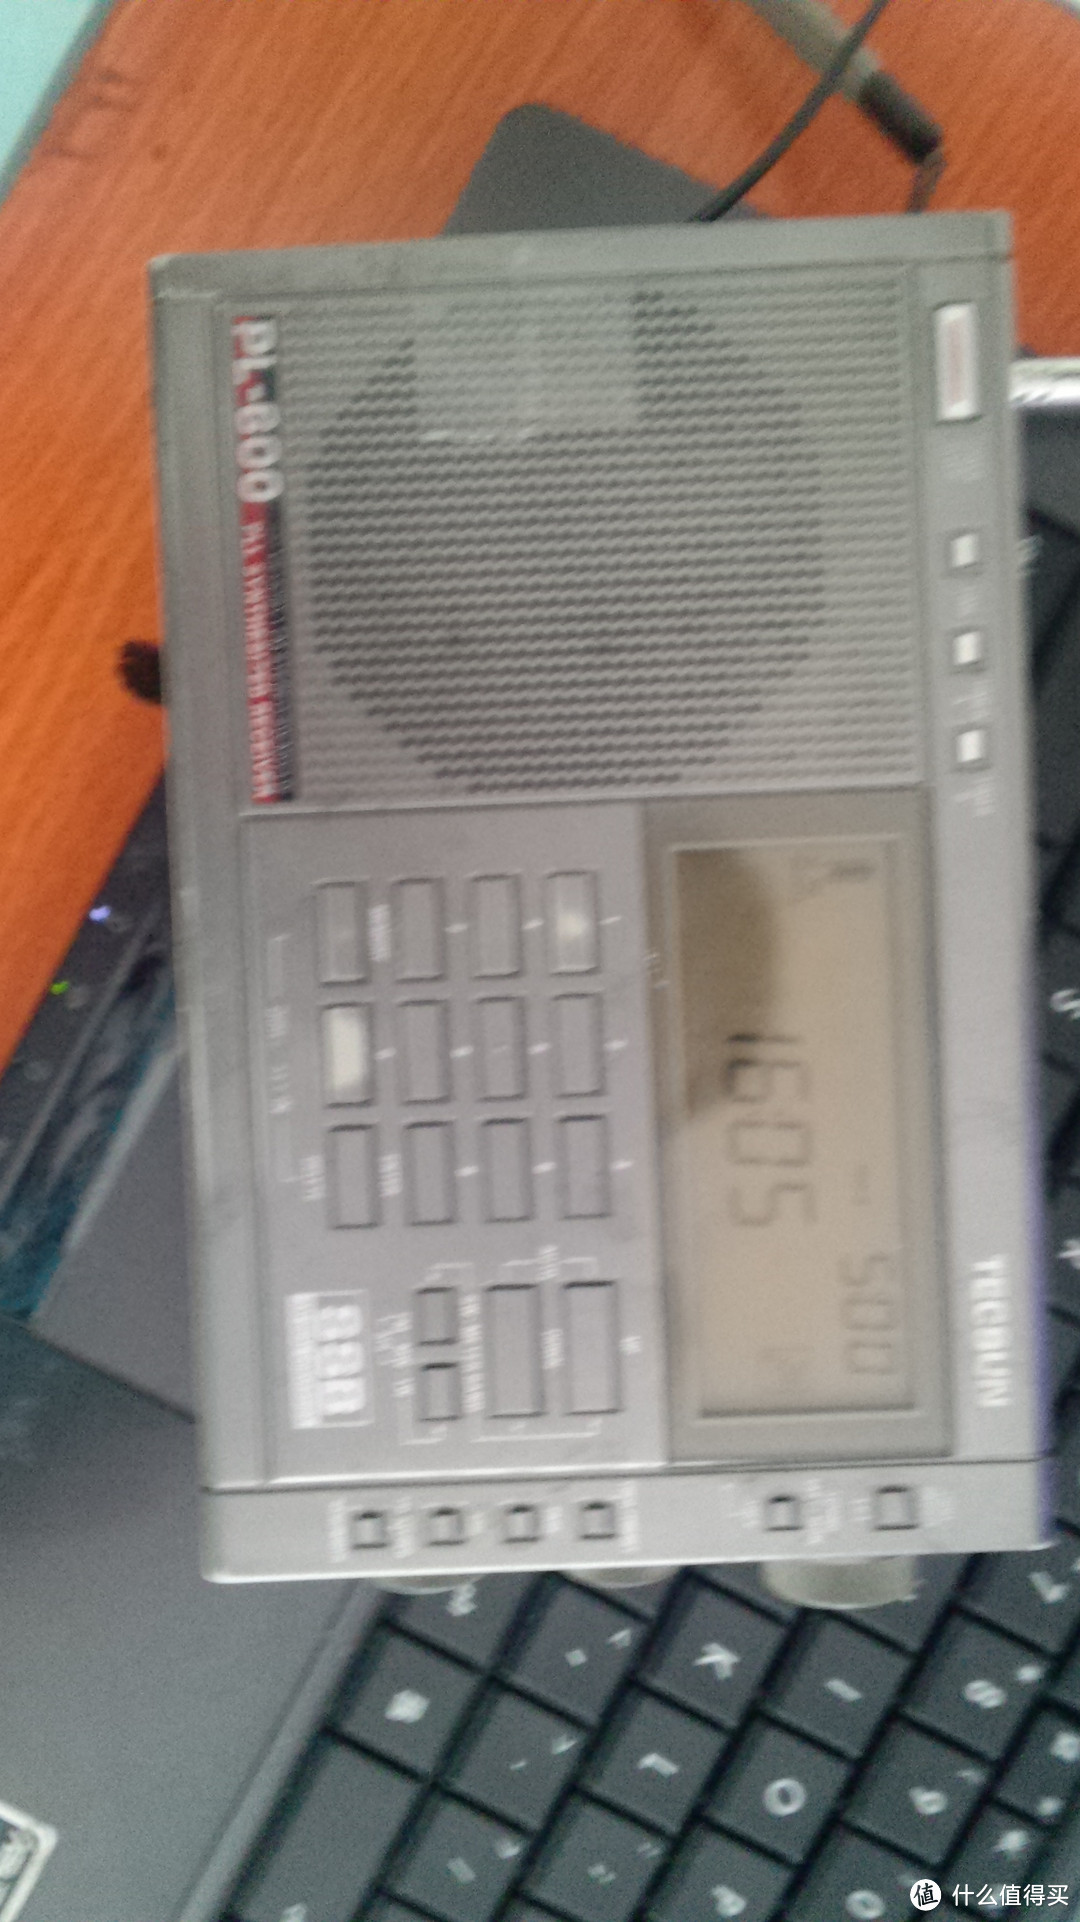 TECSUN 德生 PL-600 高性能全波段数字调谐立体声收音机